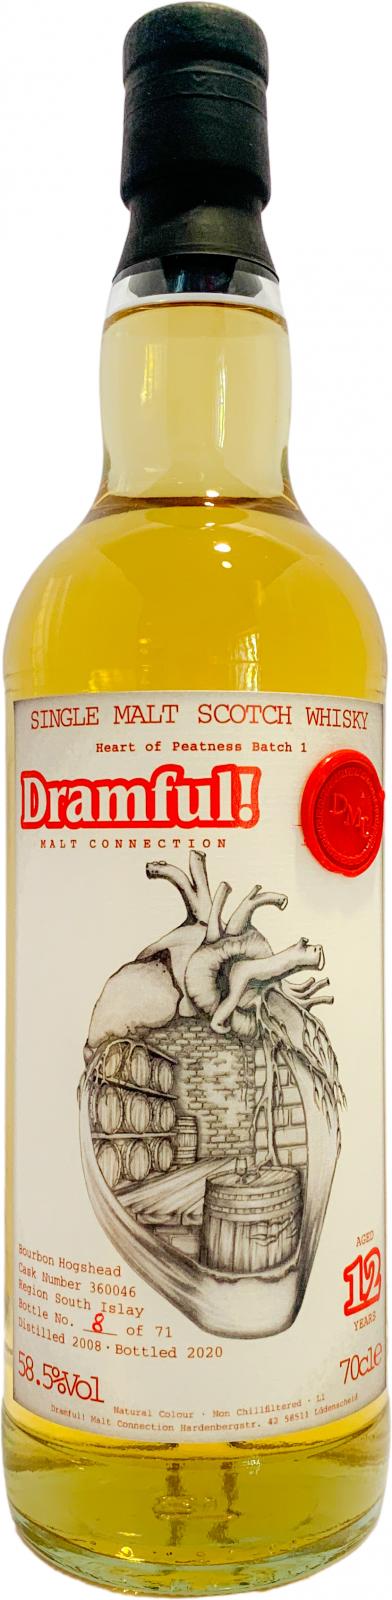 Single Malt Scotch Whisky 2008 DMC Heart of Peatness Bourbon Hoghshead #360046 58.5% 700ml